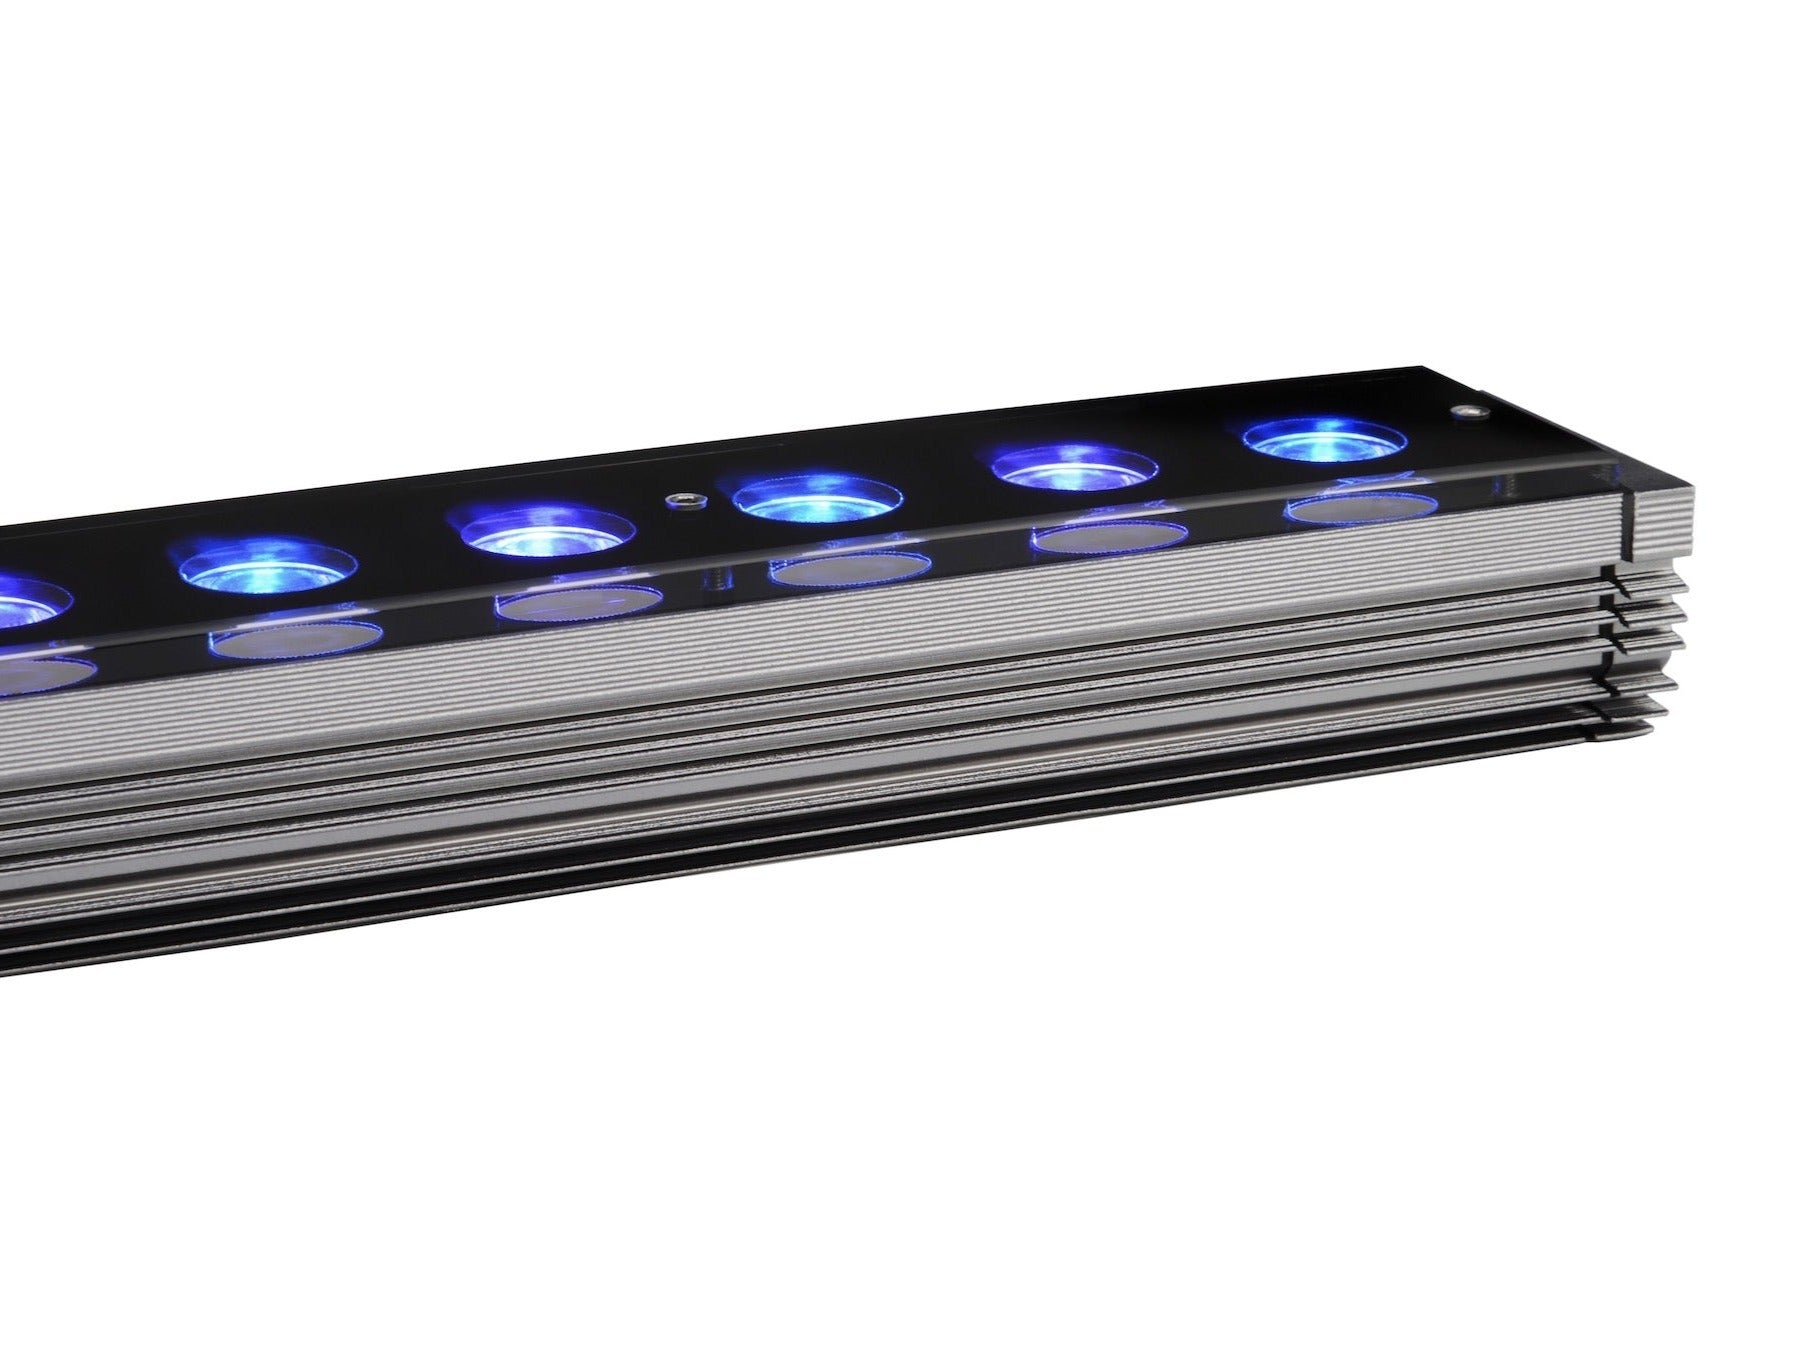 OR3 Blue Sky - LED-Leiste für Riffaquarien